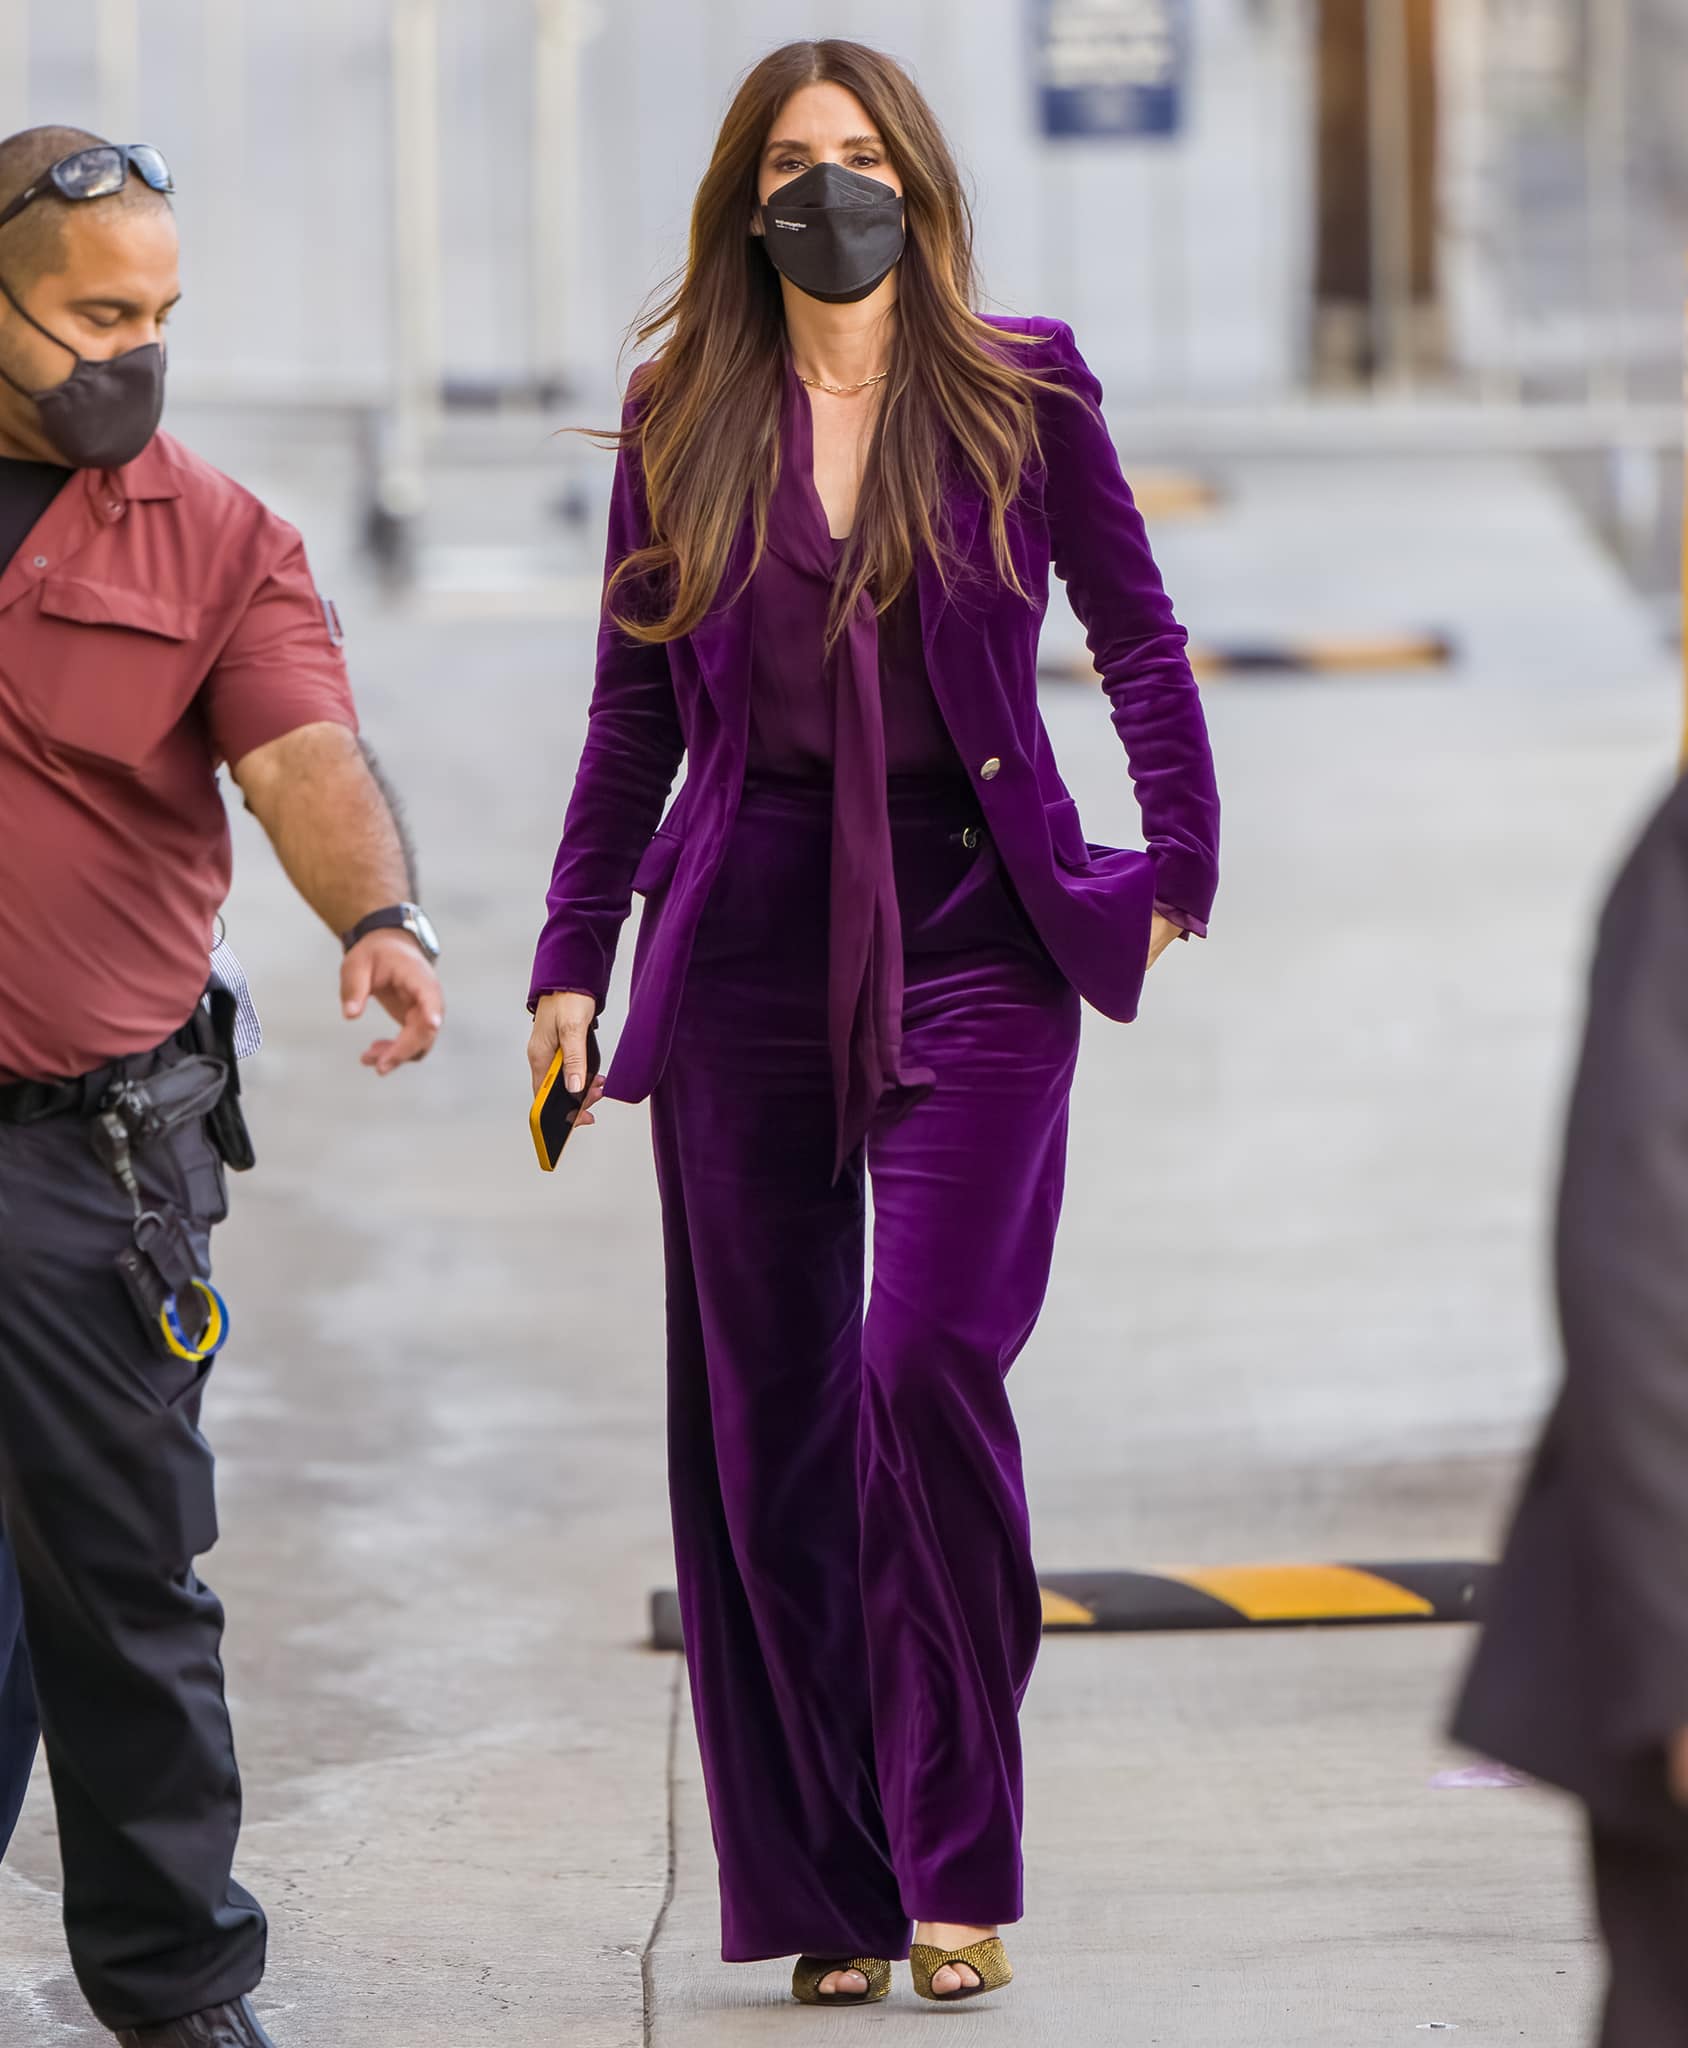 Sandra Bullock is elegant in a rich plum Temperley London Fall 2021 pant suit